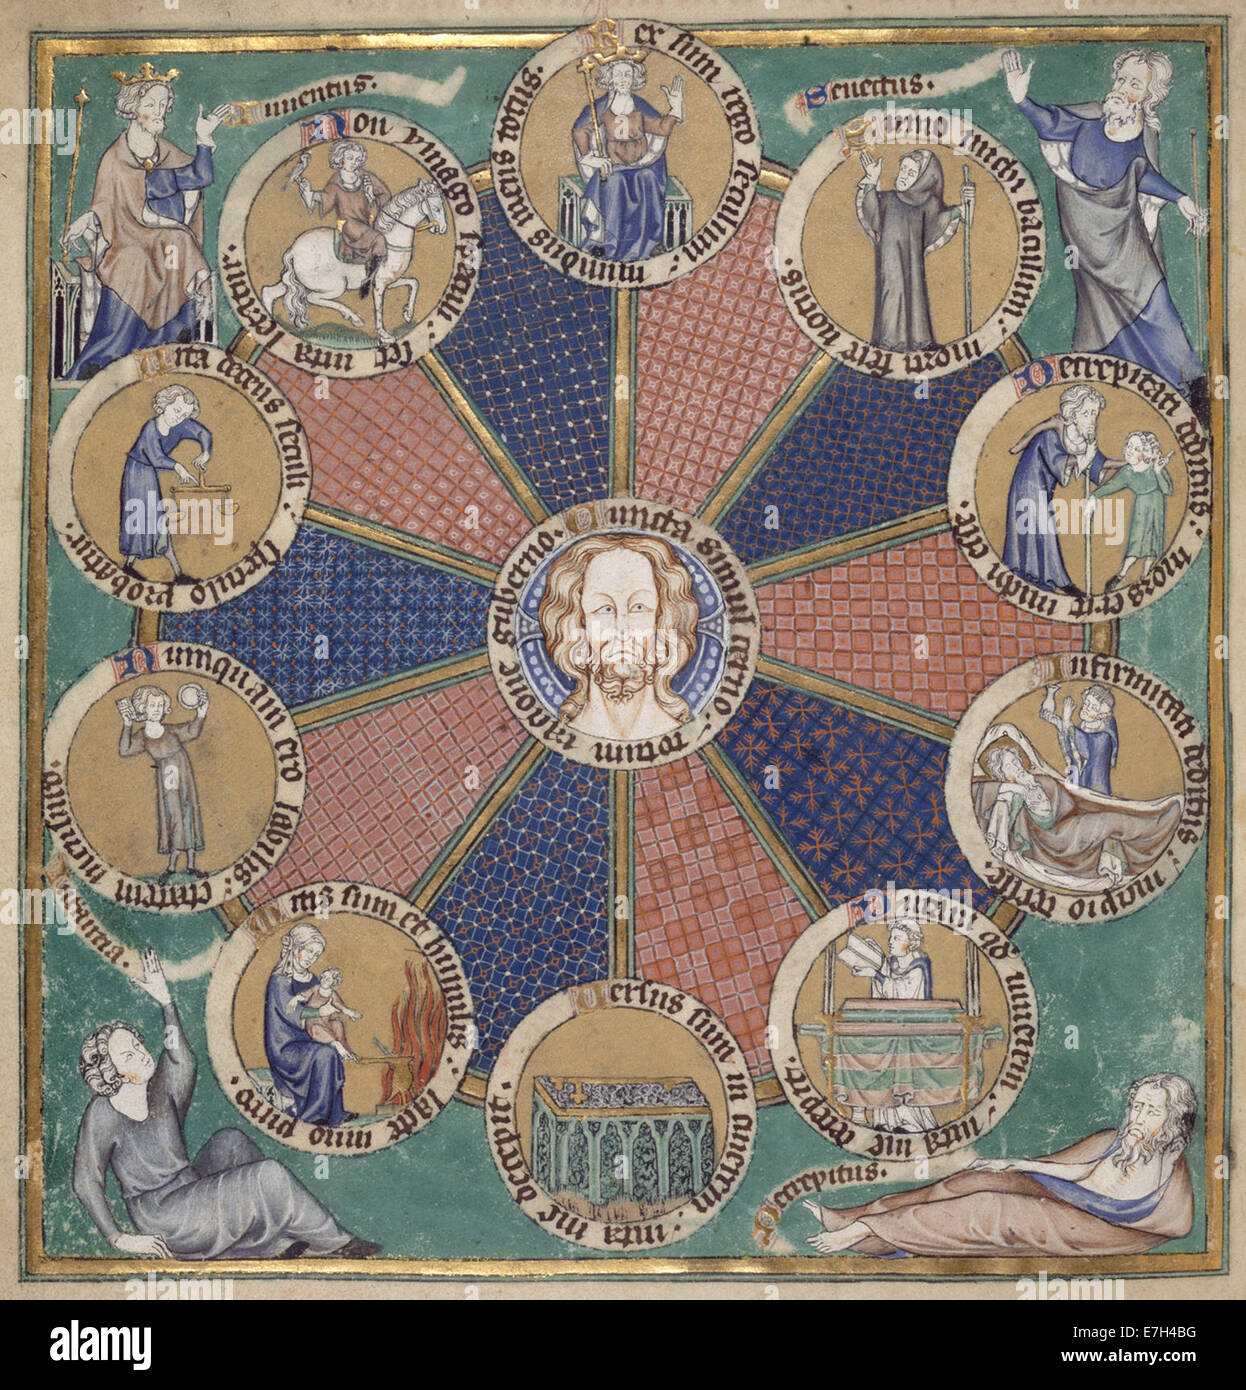 Wheel of the ten ages of man - Psalter of Robert de Lisle (c.1310), f.126v - BL Arundel MS 83 Stock Photo